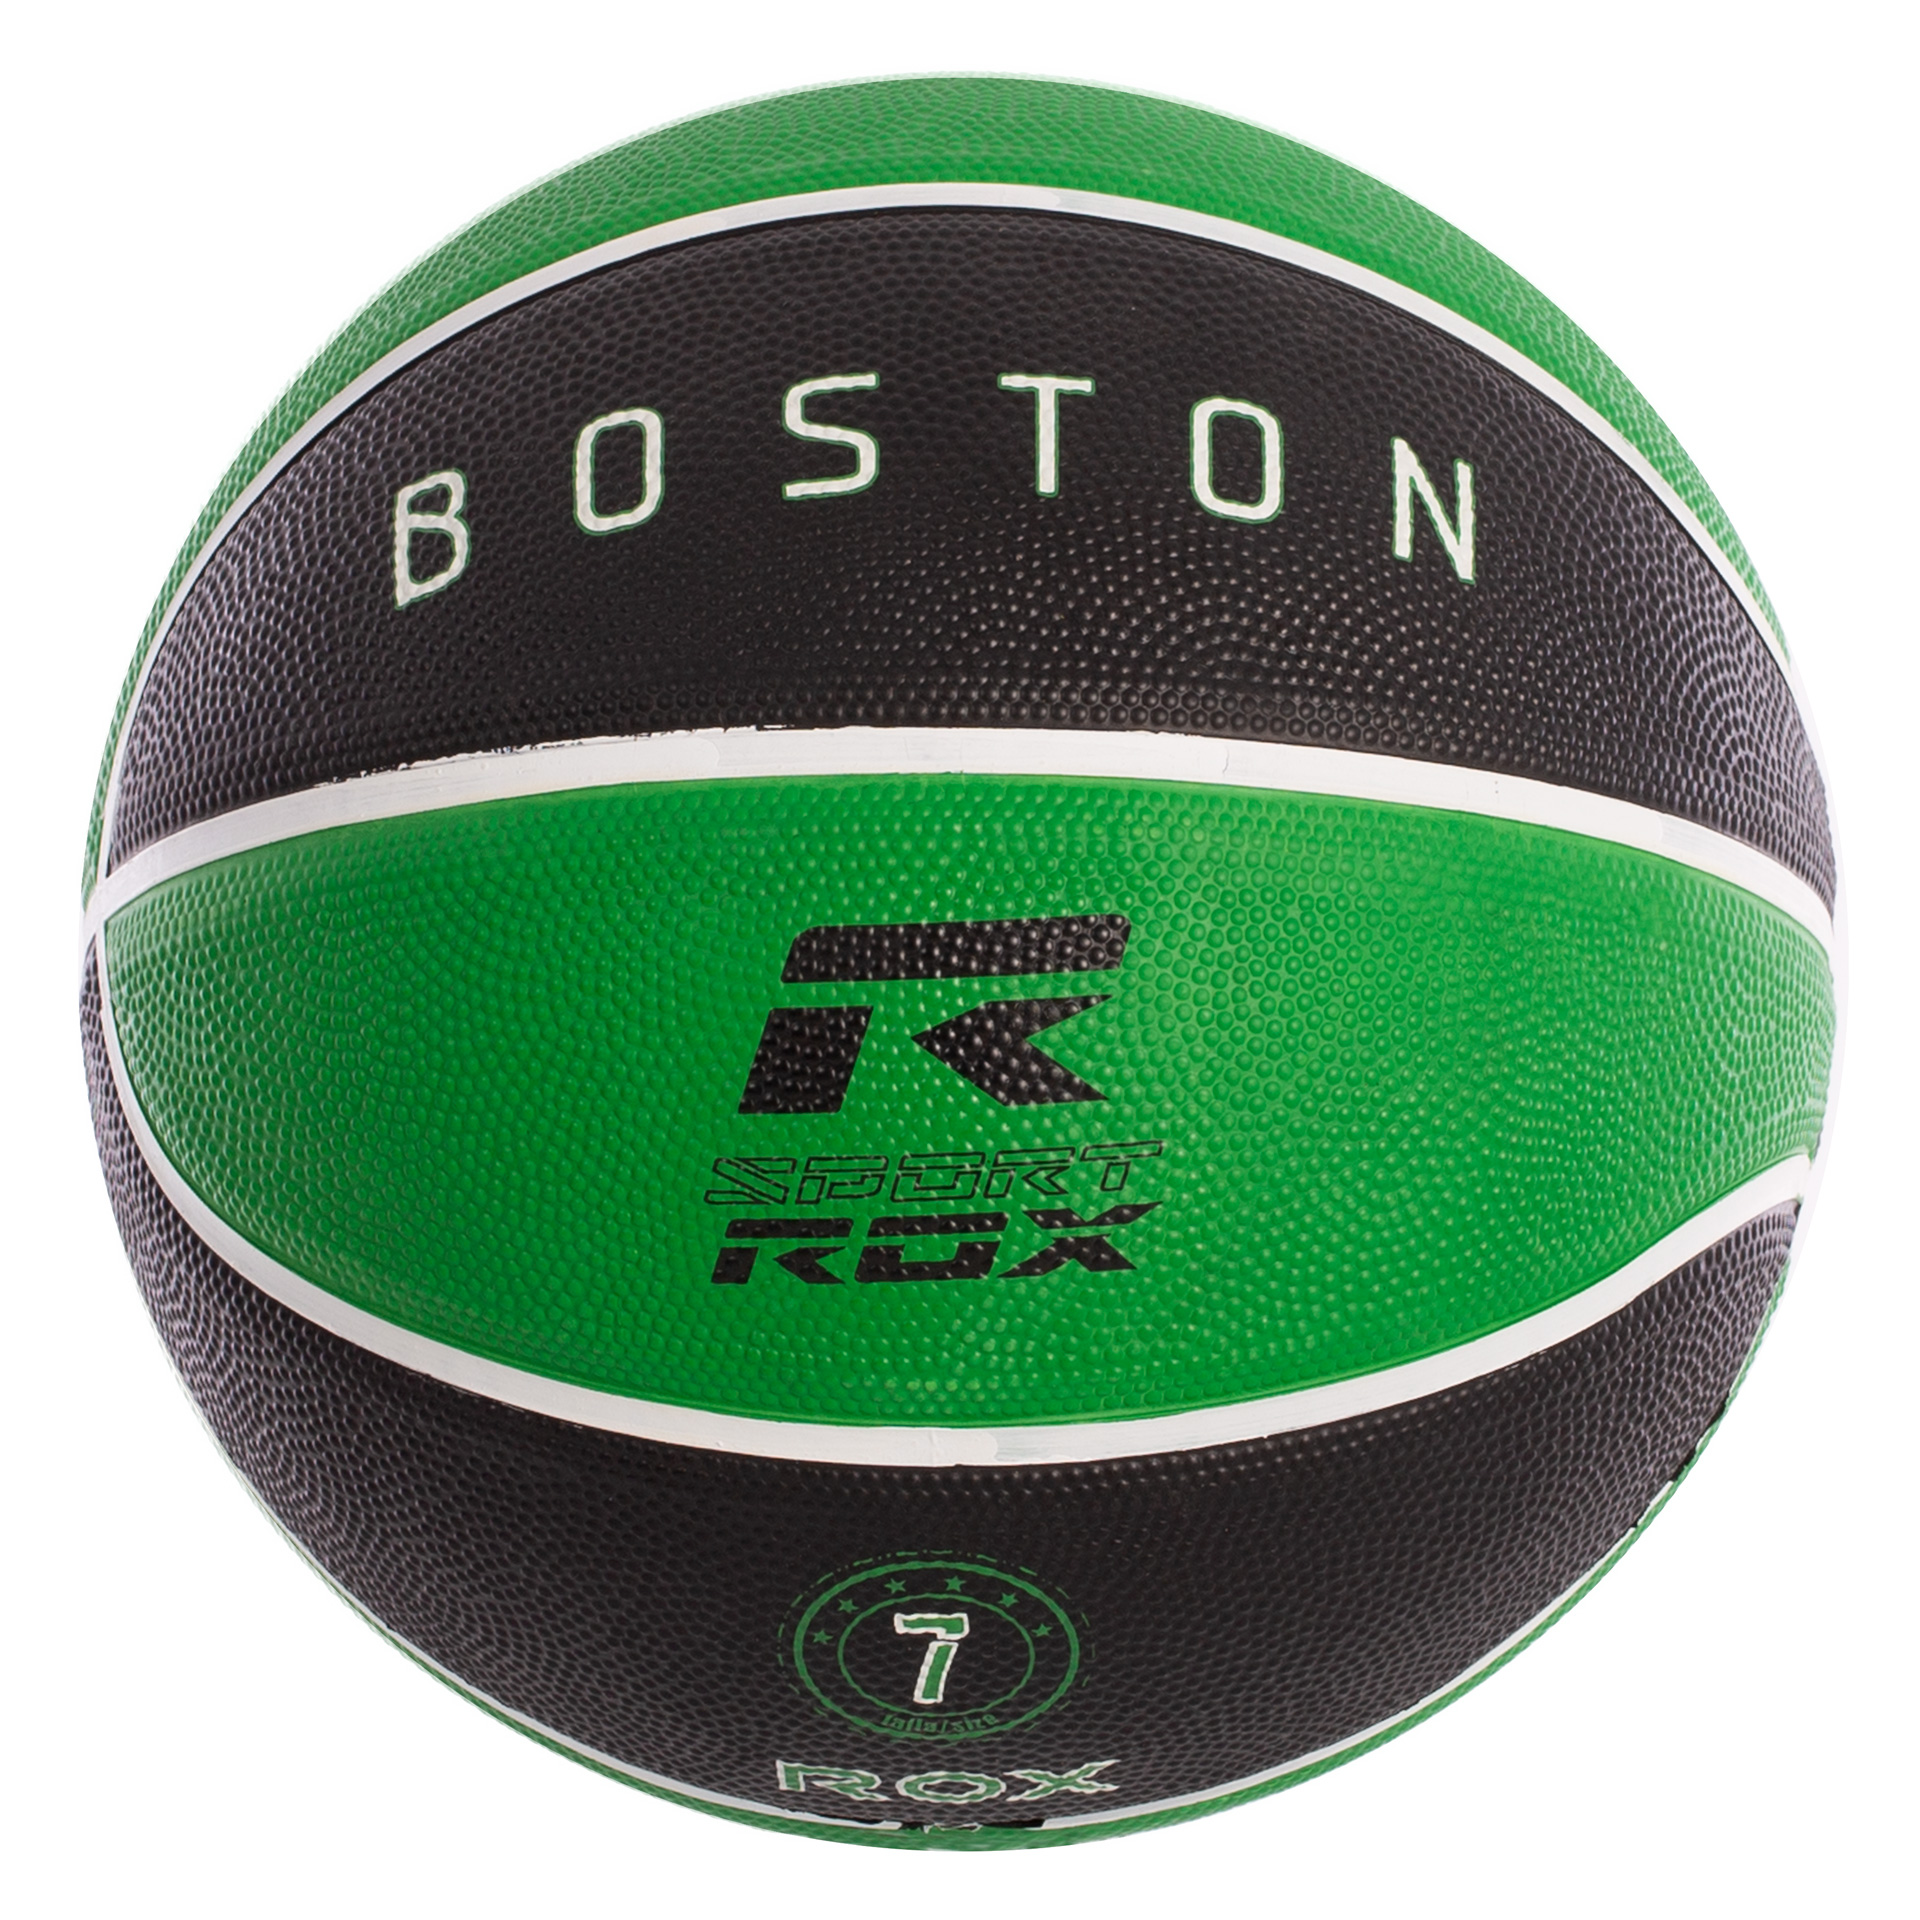 balón baloncesto nylon rox boston verde negro 2